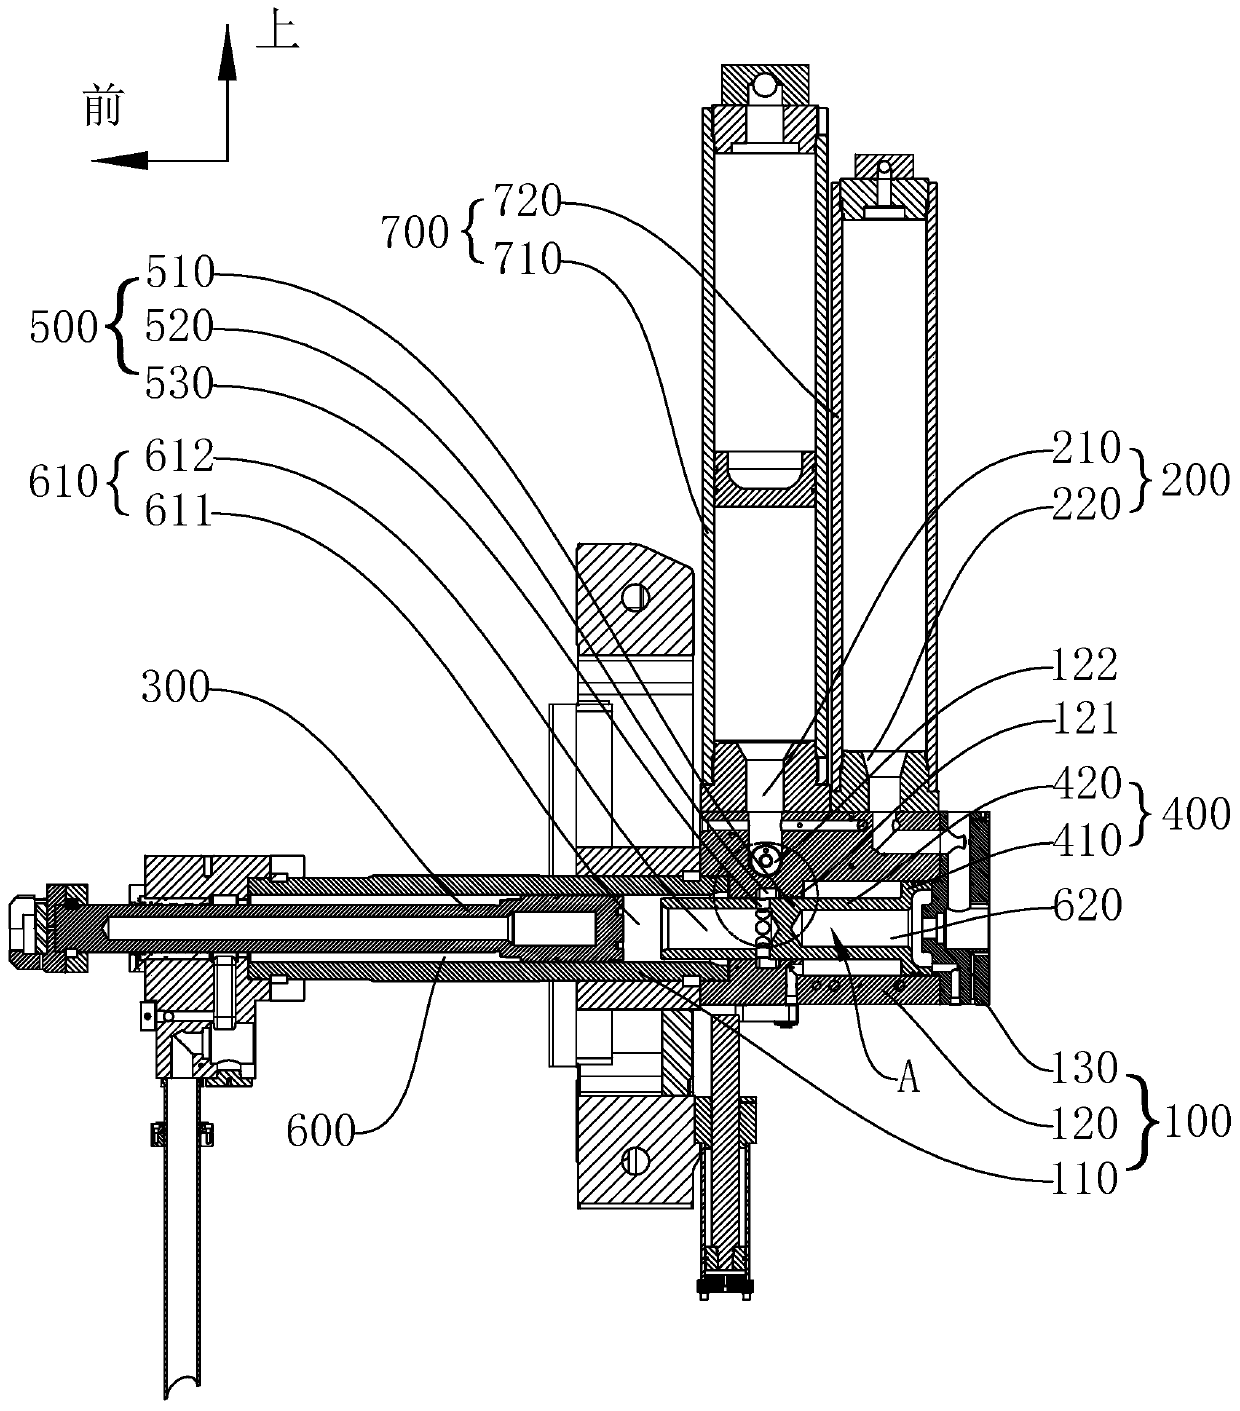 Press-shoot pressurization system and die-casting machine